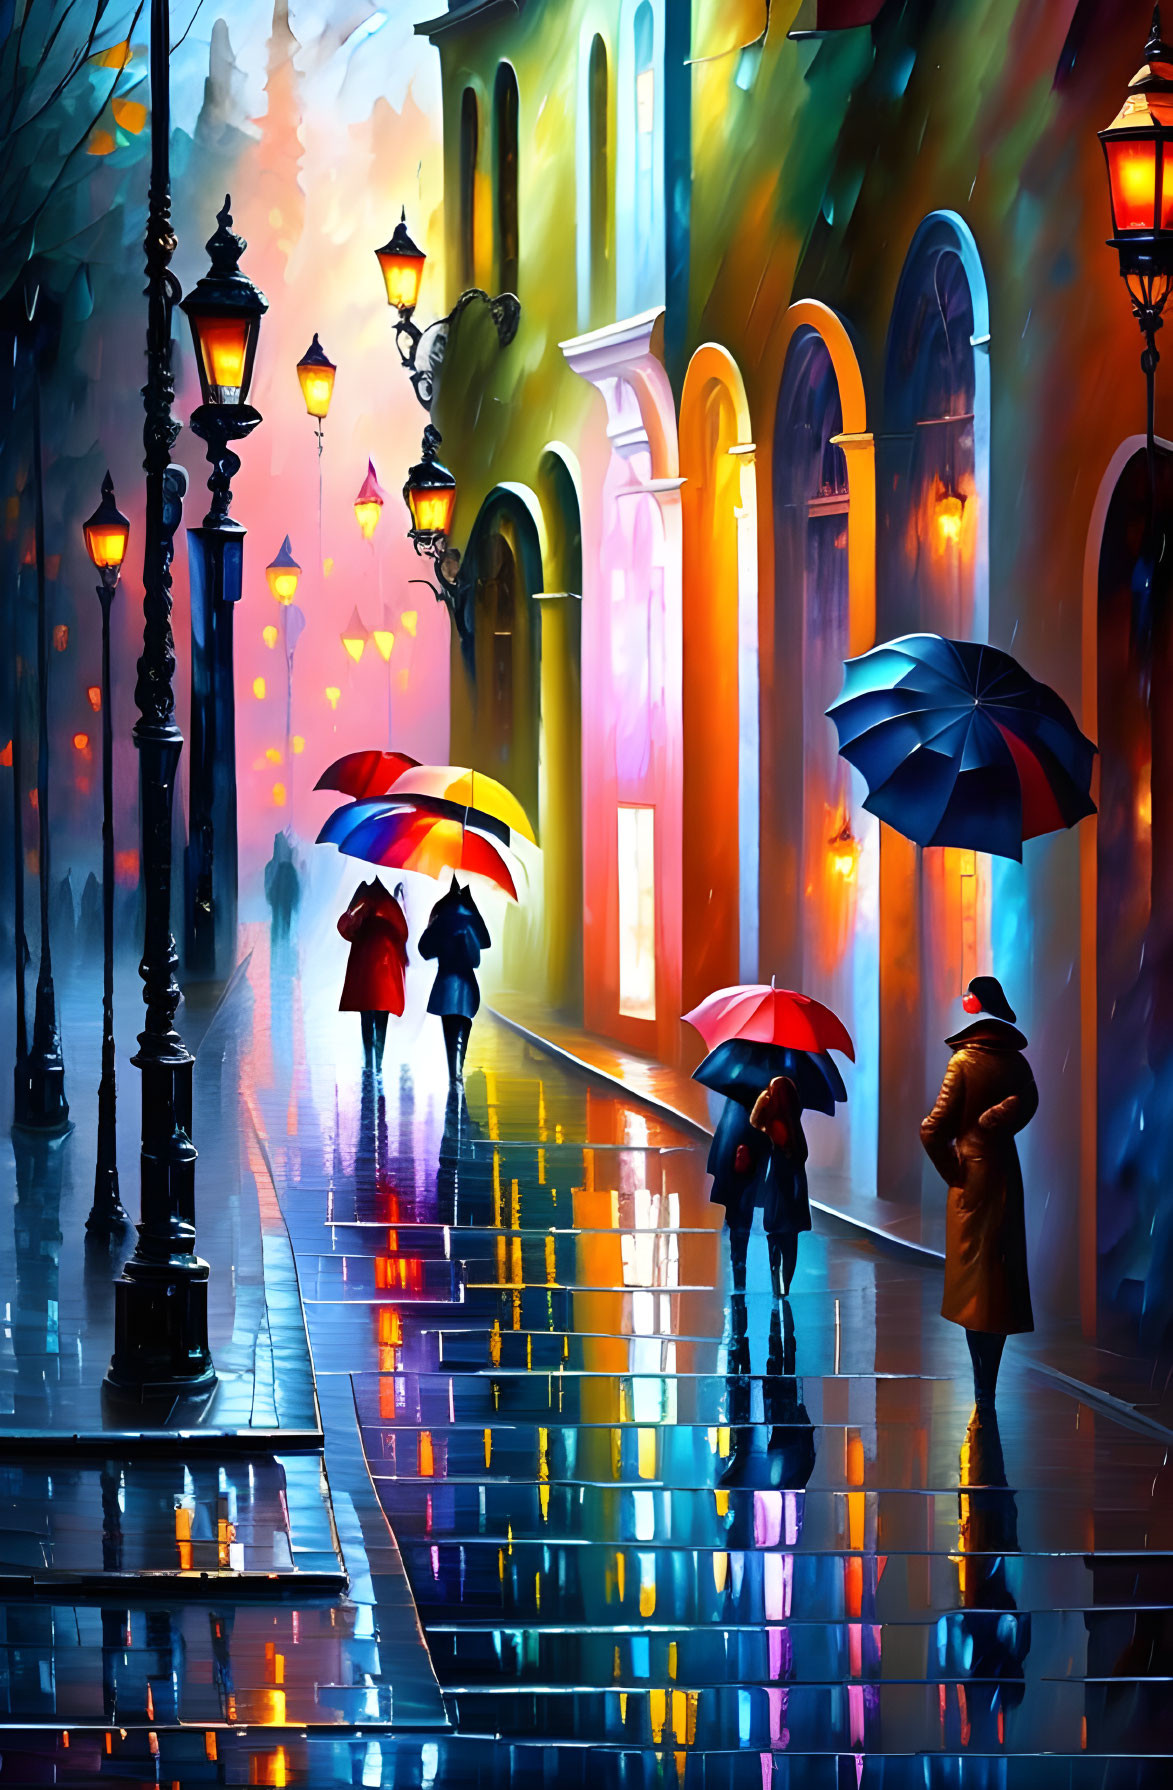 Rainy evening street scene with glowing streetlights and people holding umbrellas